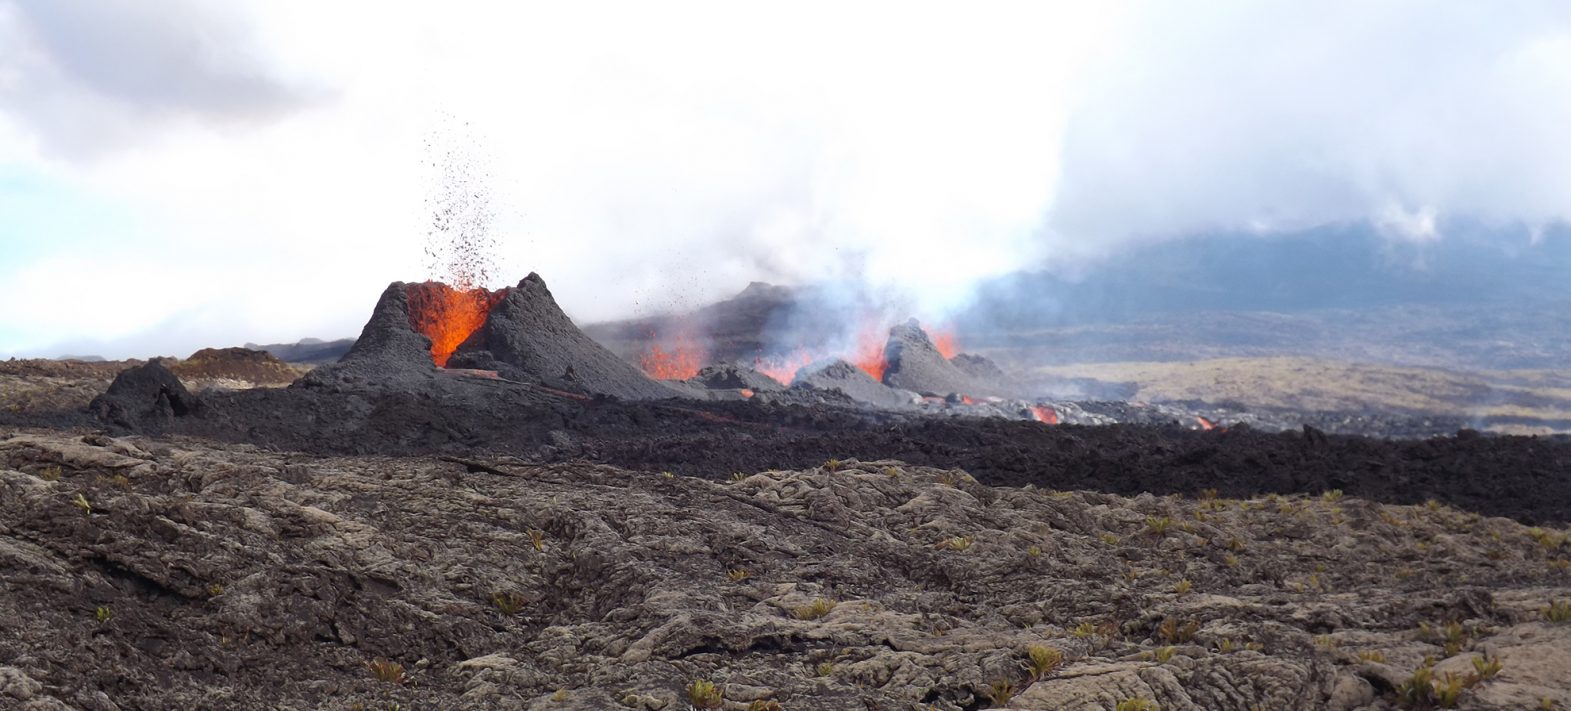 End of the eruption at Piton de la Fournaise on Reunion Island